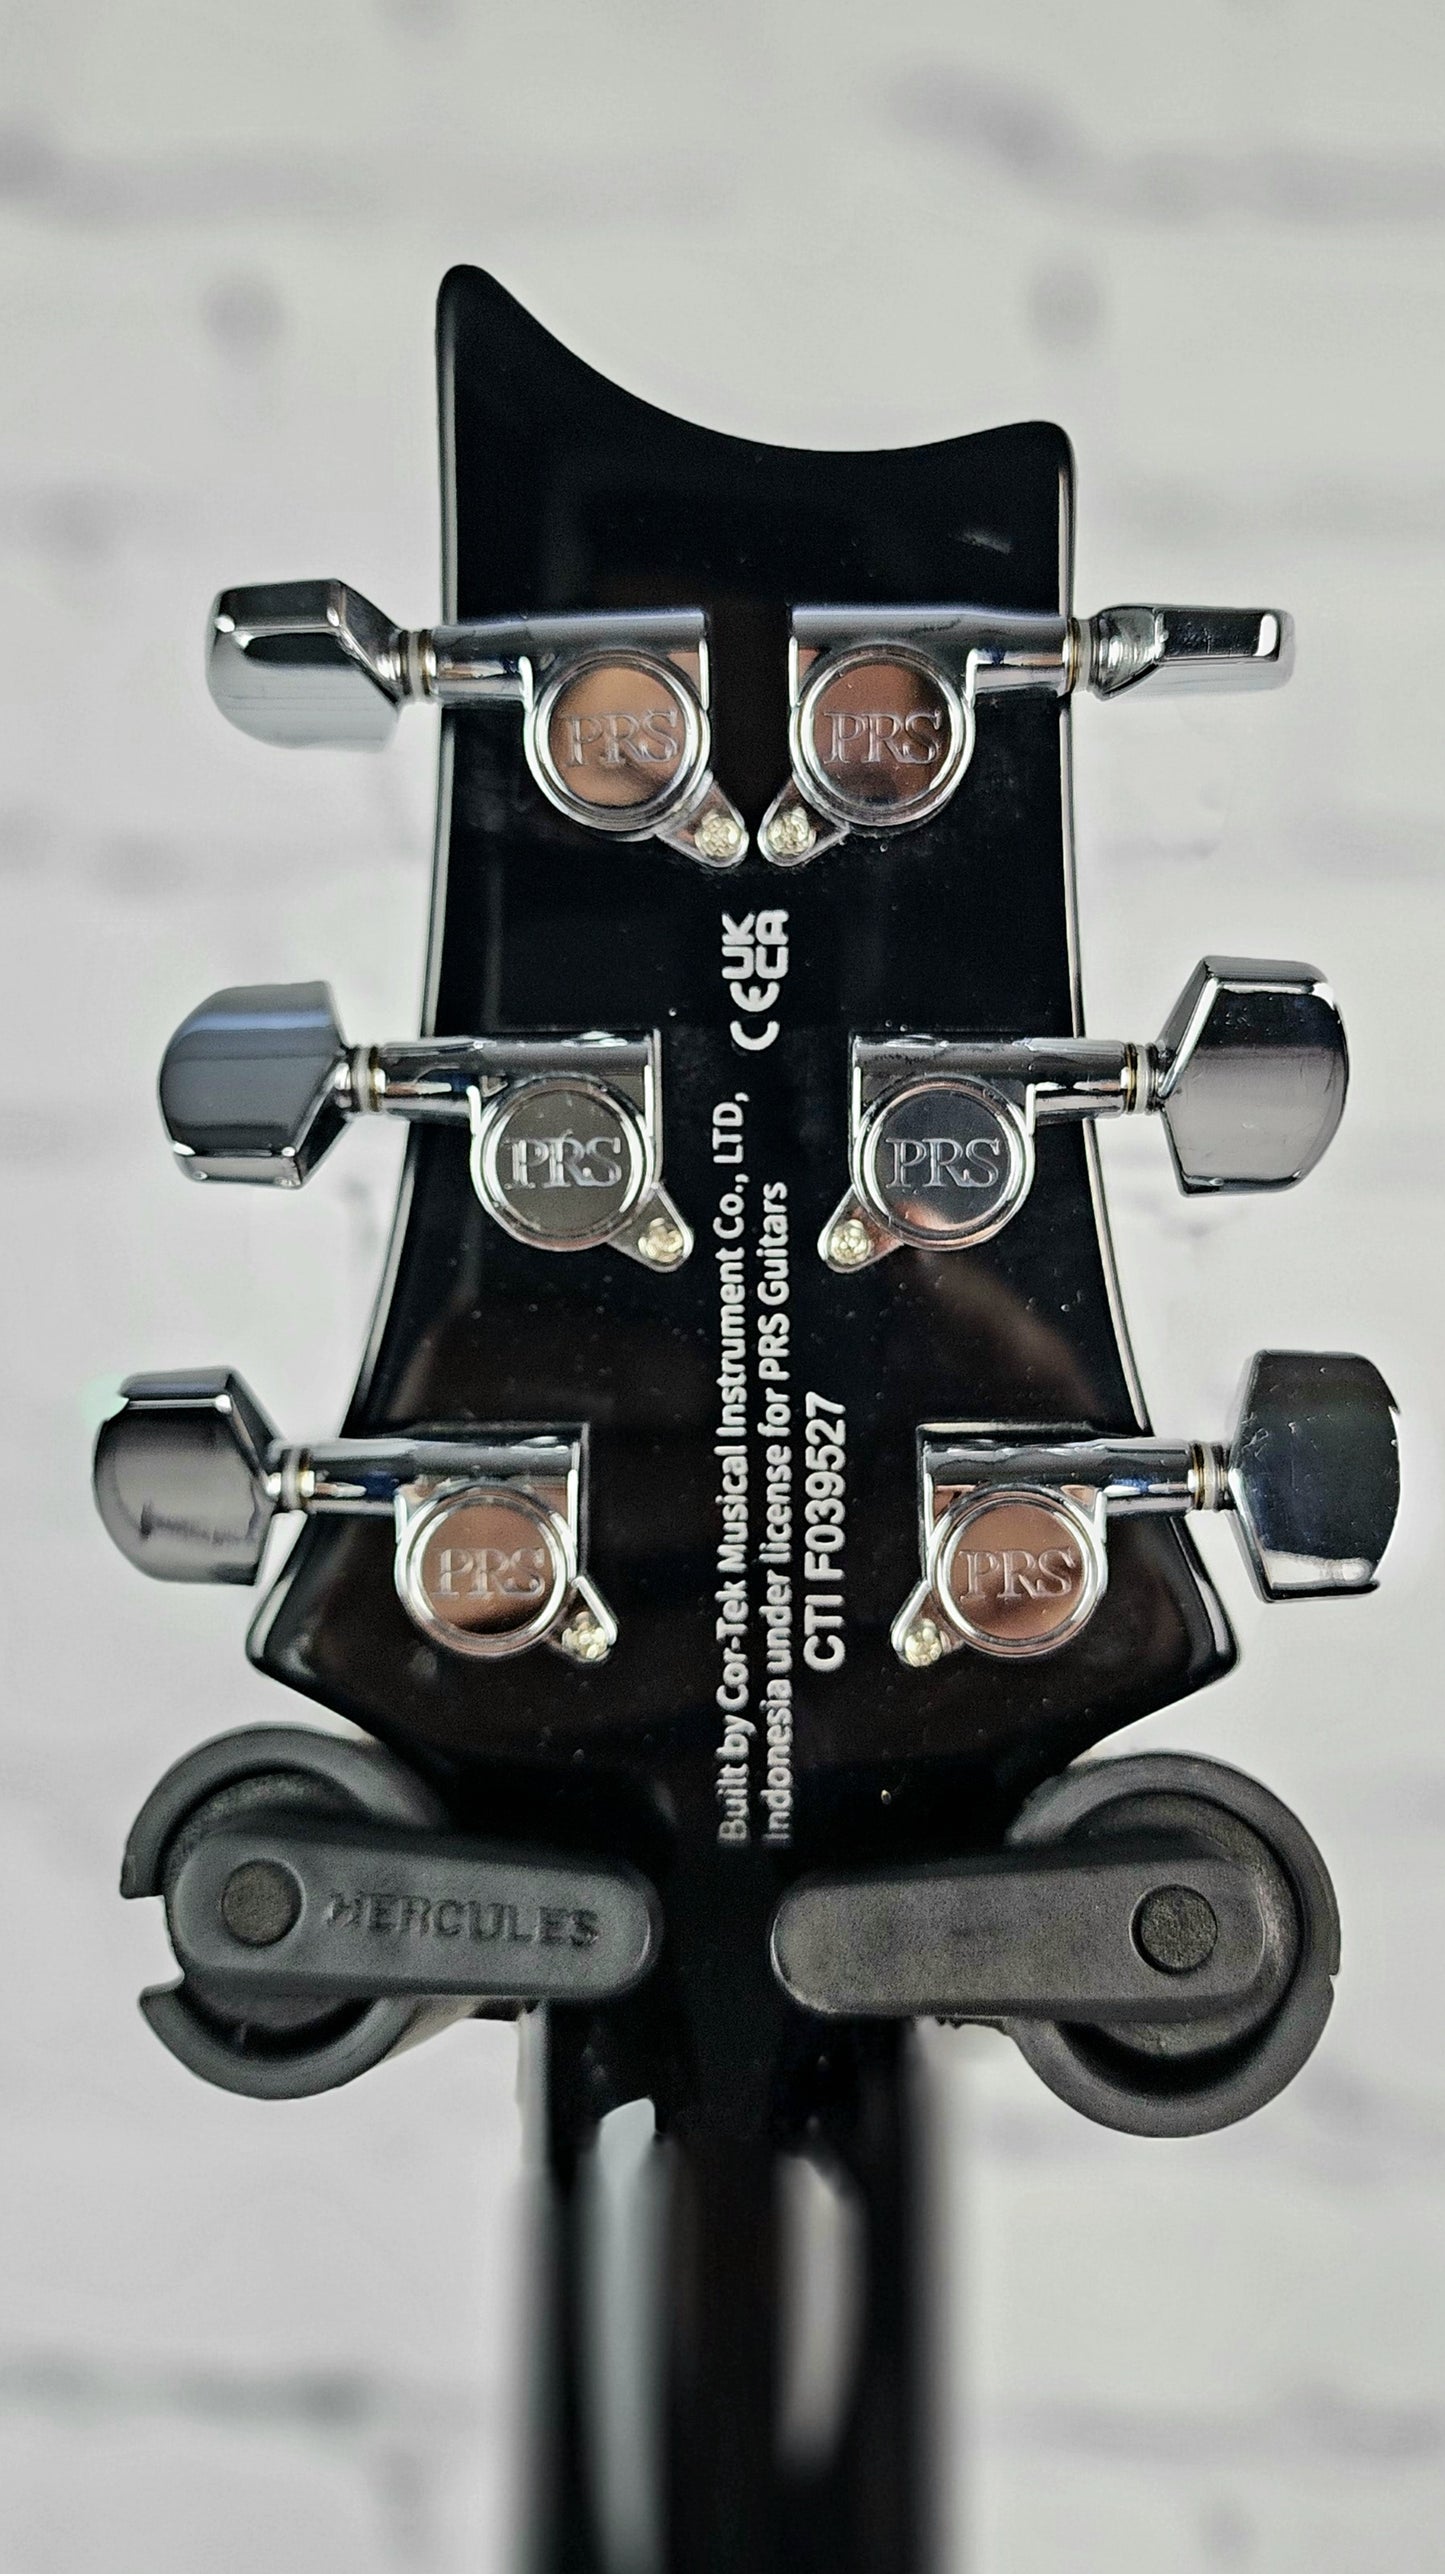 Paul Reed Smith PRS SE Custom 24 Floyd Rose Electric Guitar Charcoal Burst Lefty Left Handed